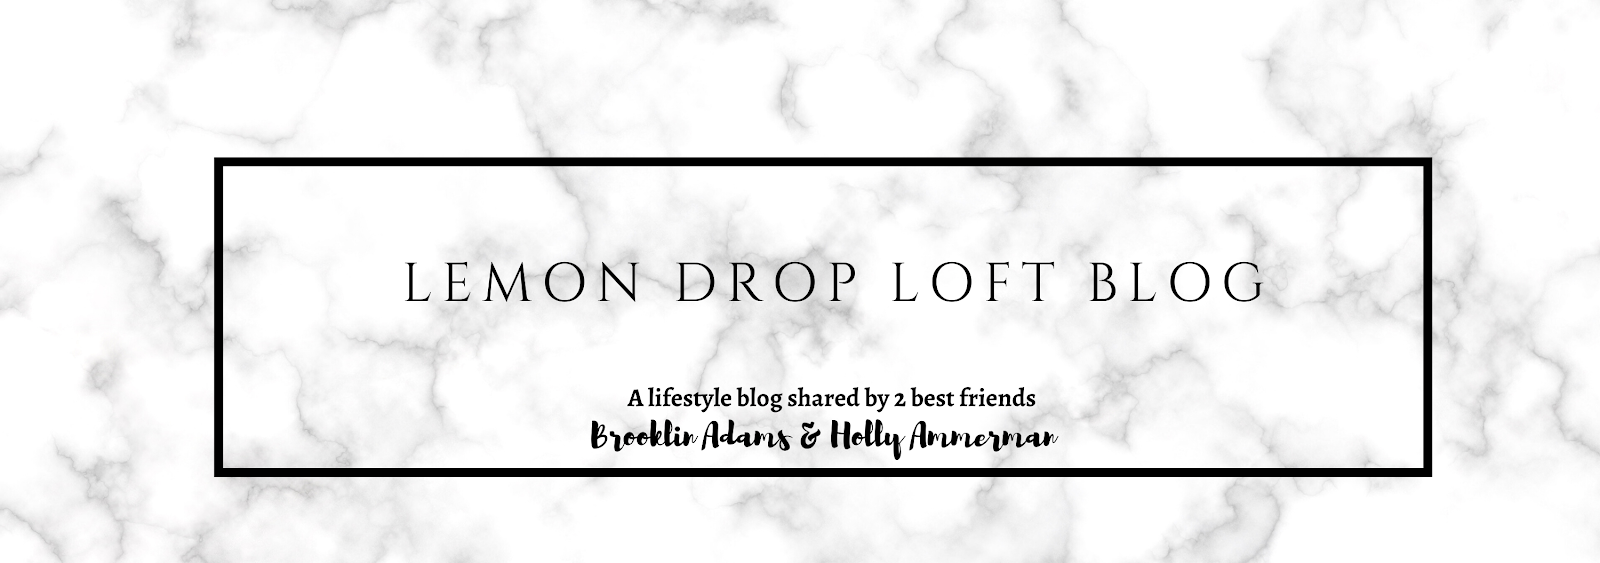 Lemon Drop Loft Blog